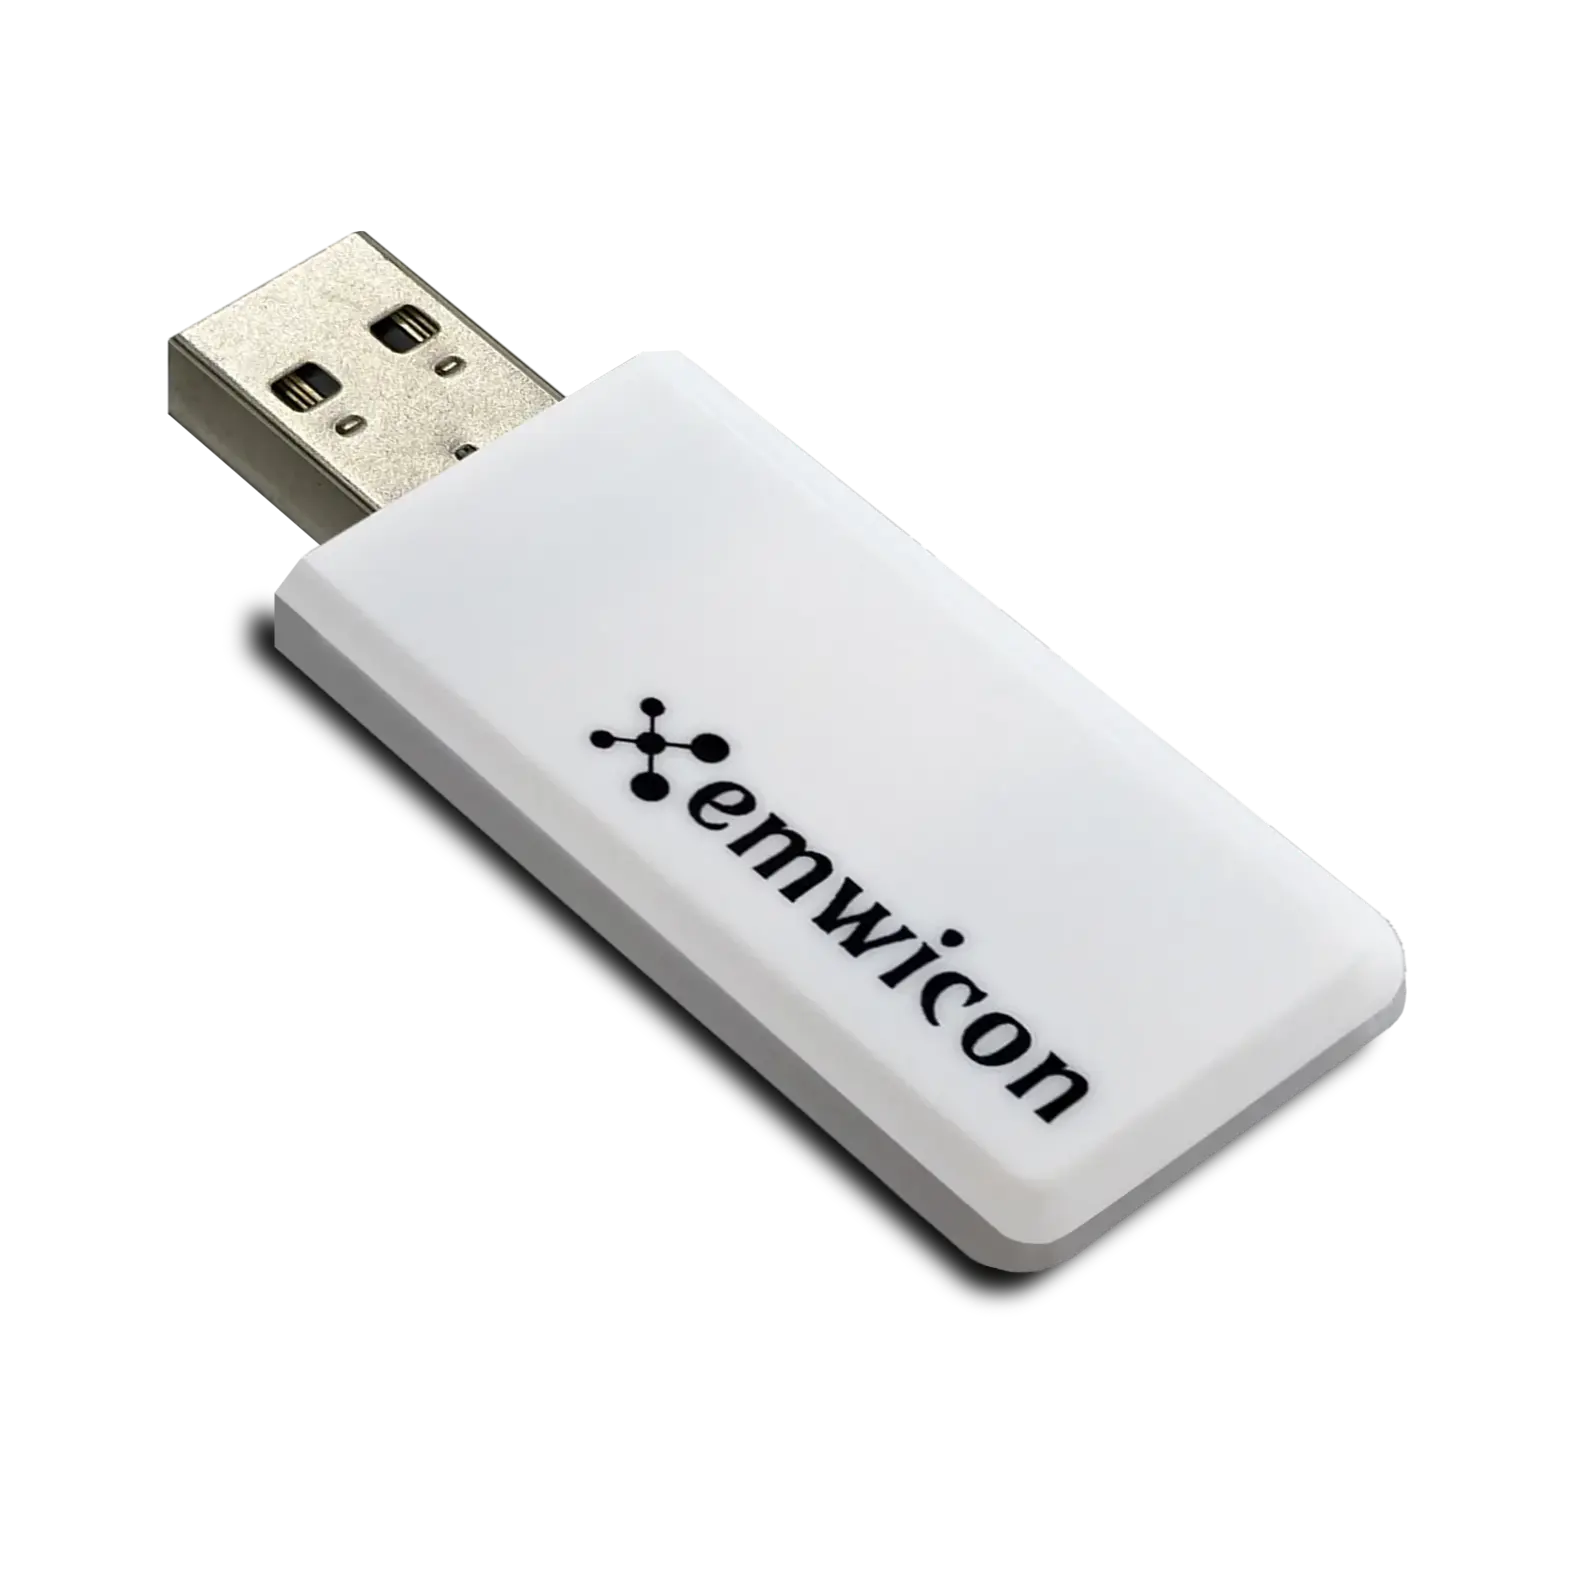 Realtek wifi card USB Type A. 802.11ac/a/b/g/n WiFi5 +BT4.2 2X2 usb wifi bluetooth combo usb